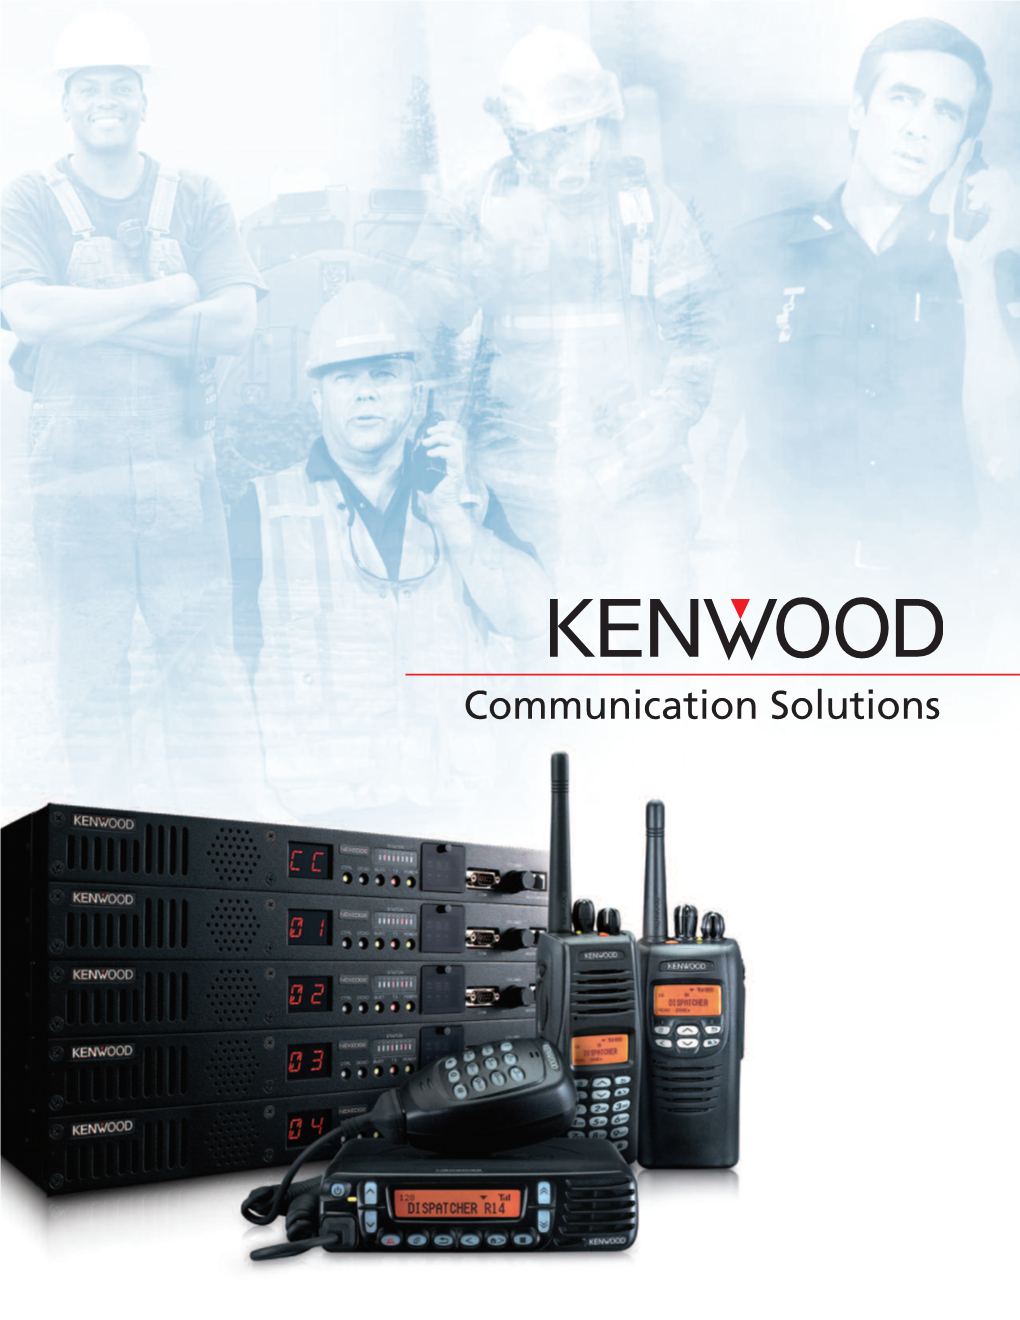 Communication Solutions Kenwood Philosophy